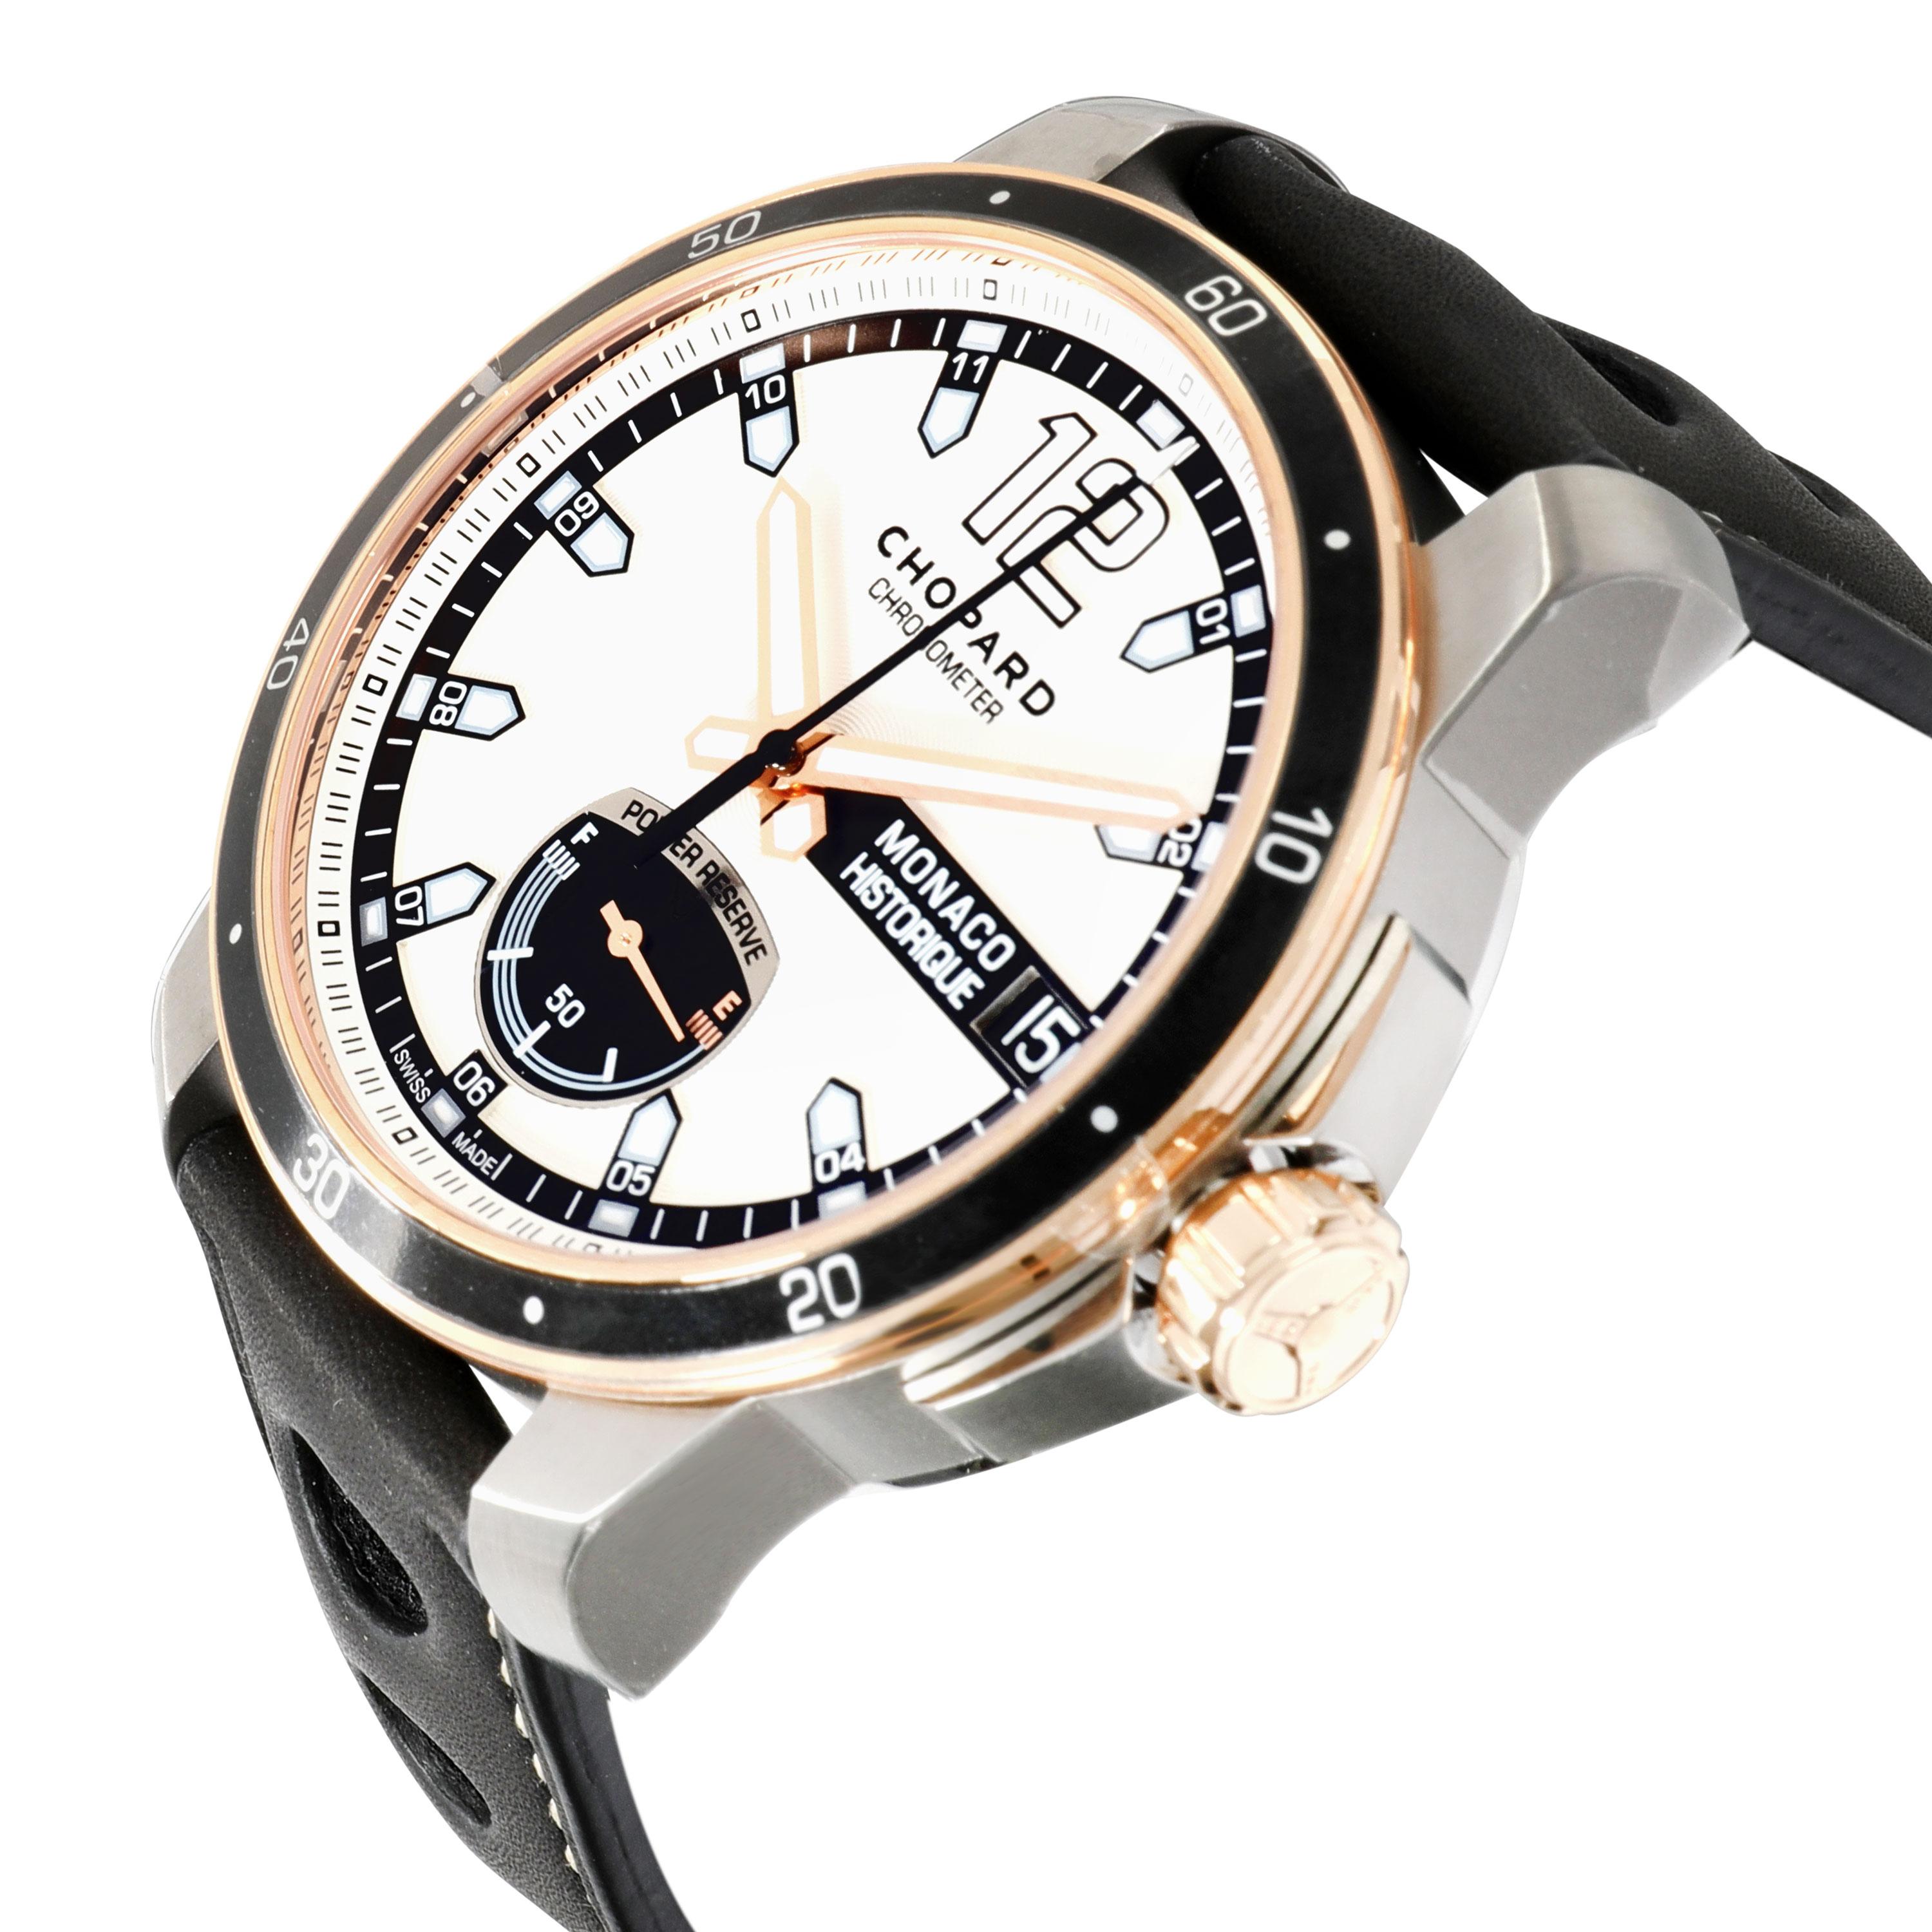 Chopard Grand Prix de Monaco 168569-9001 Men's Watch in 18kt Rose Gold 2